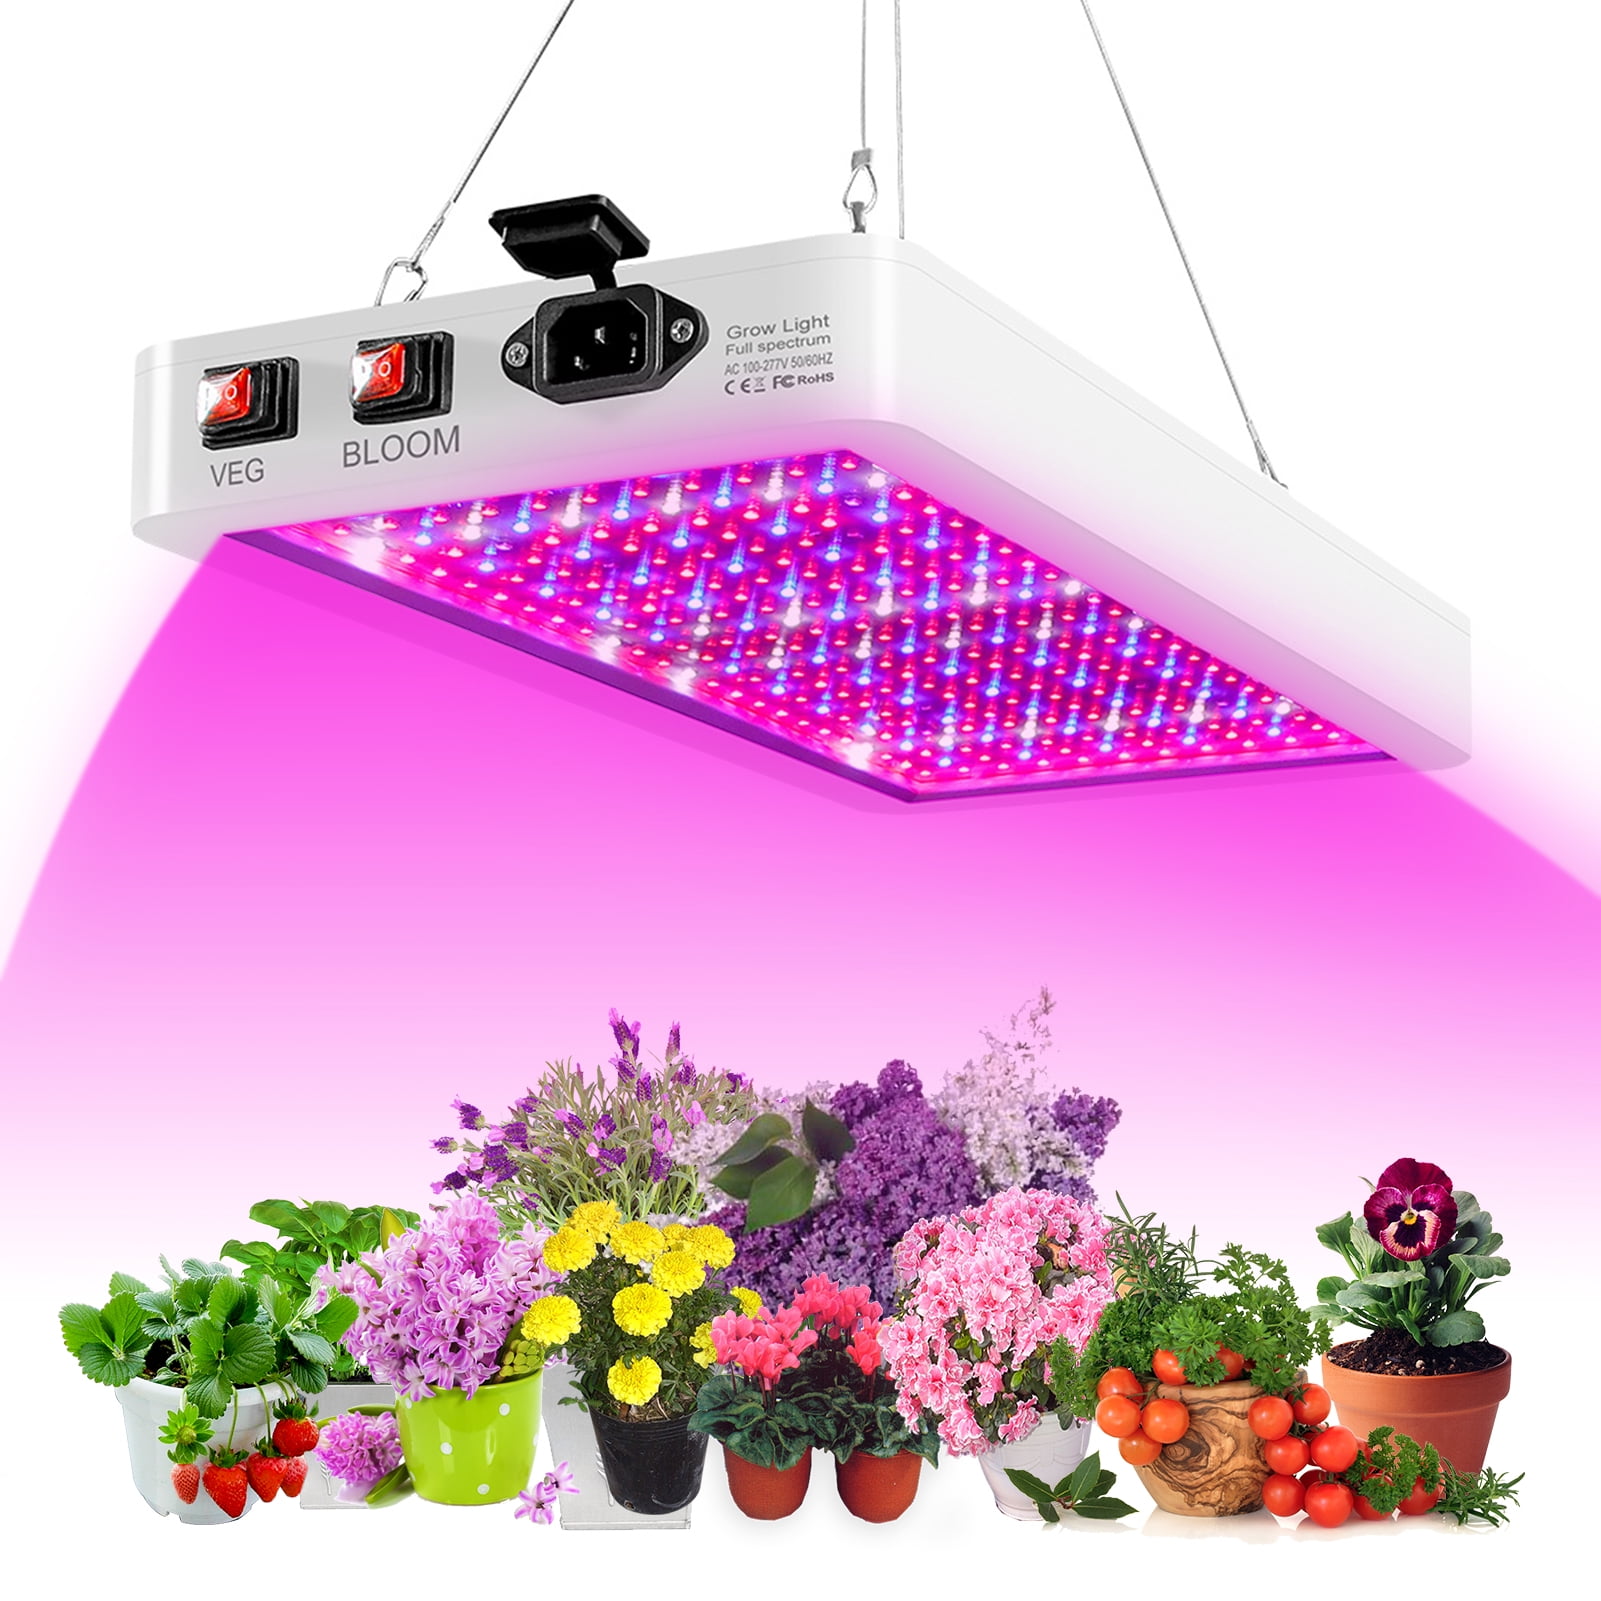 5000W LED Grow Light Full Spectrum Indoor Hydroponic Plant Flower Veg Lamp Bloom 